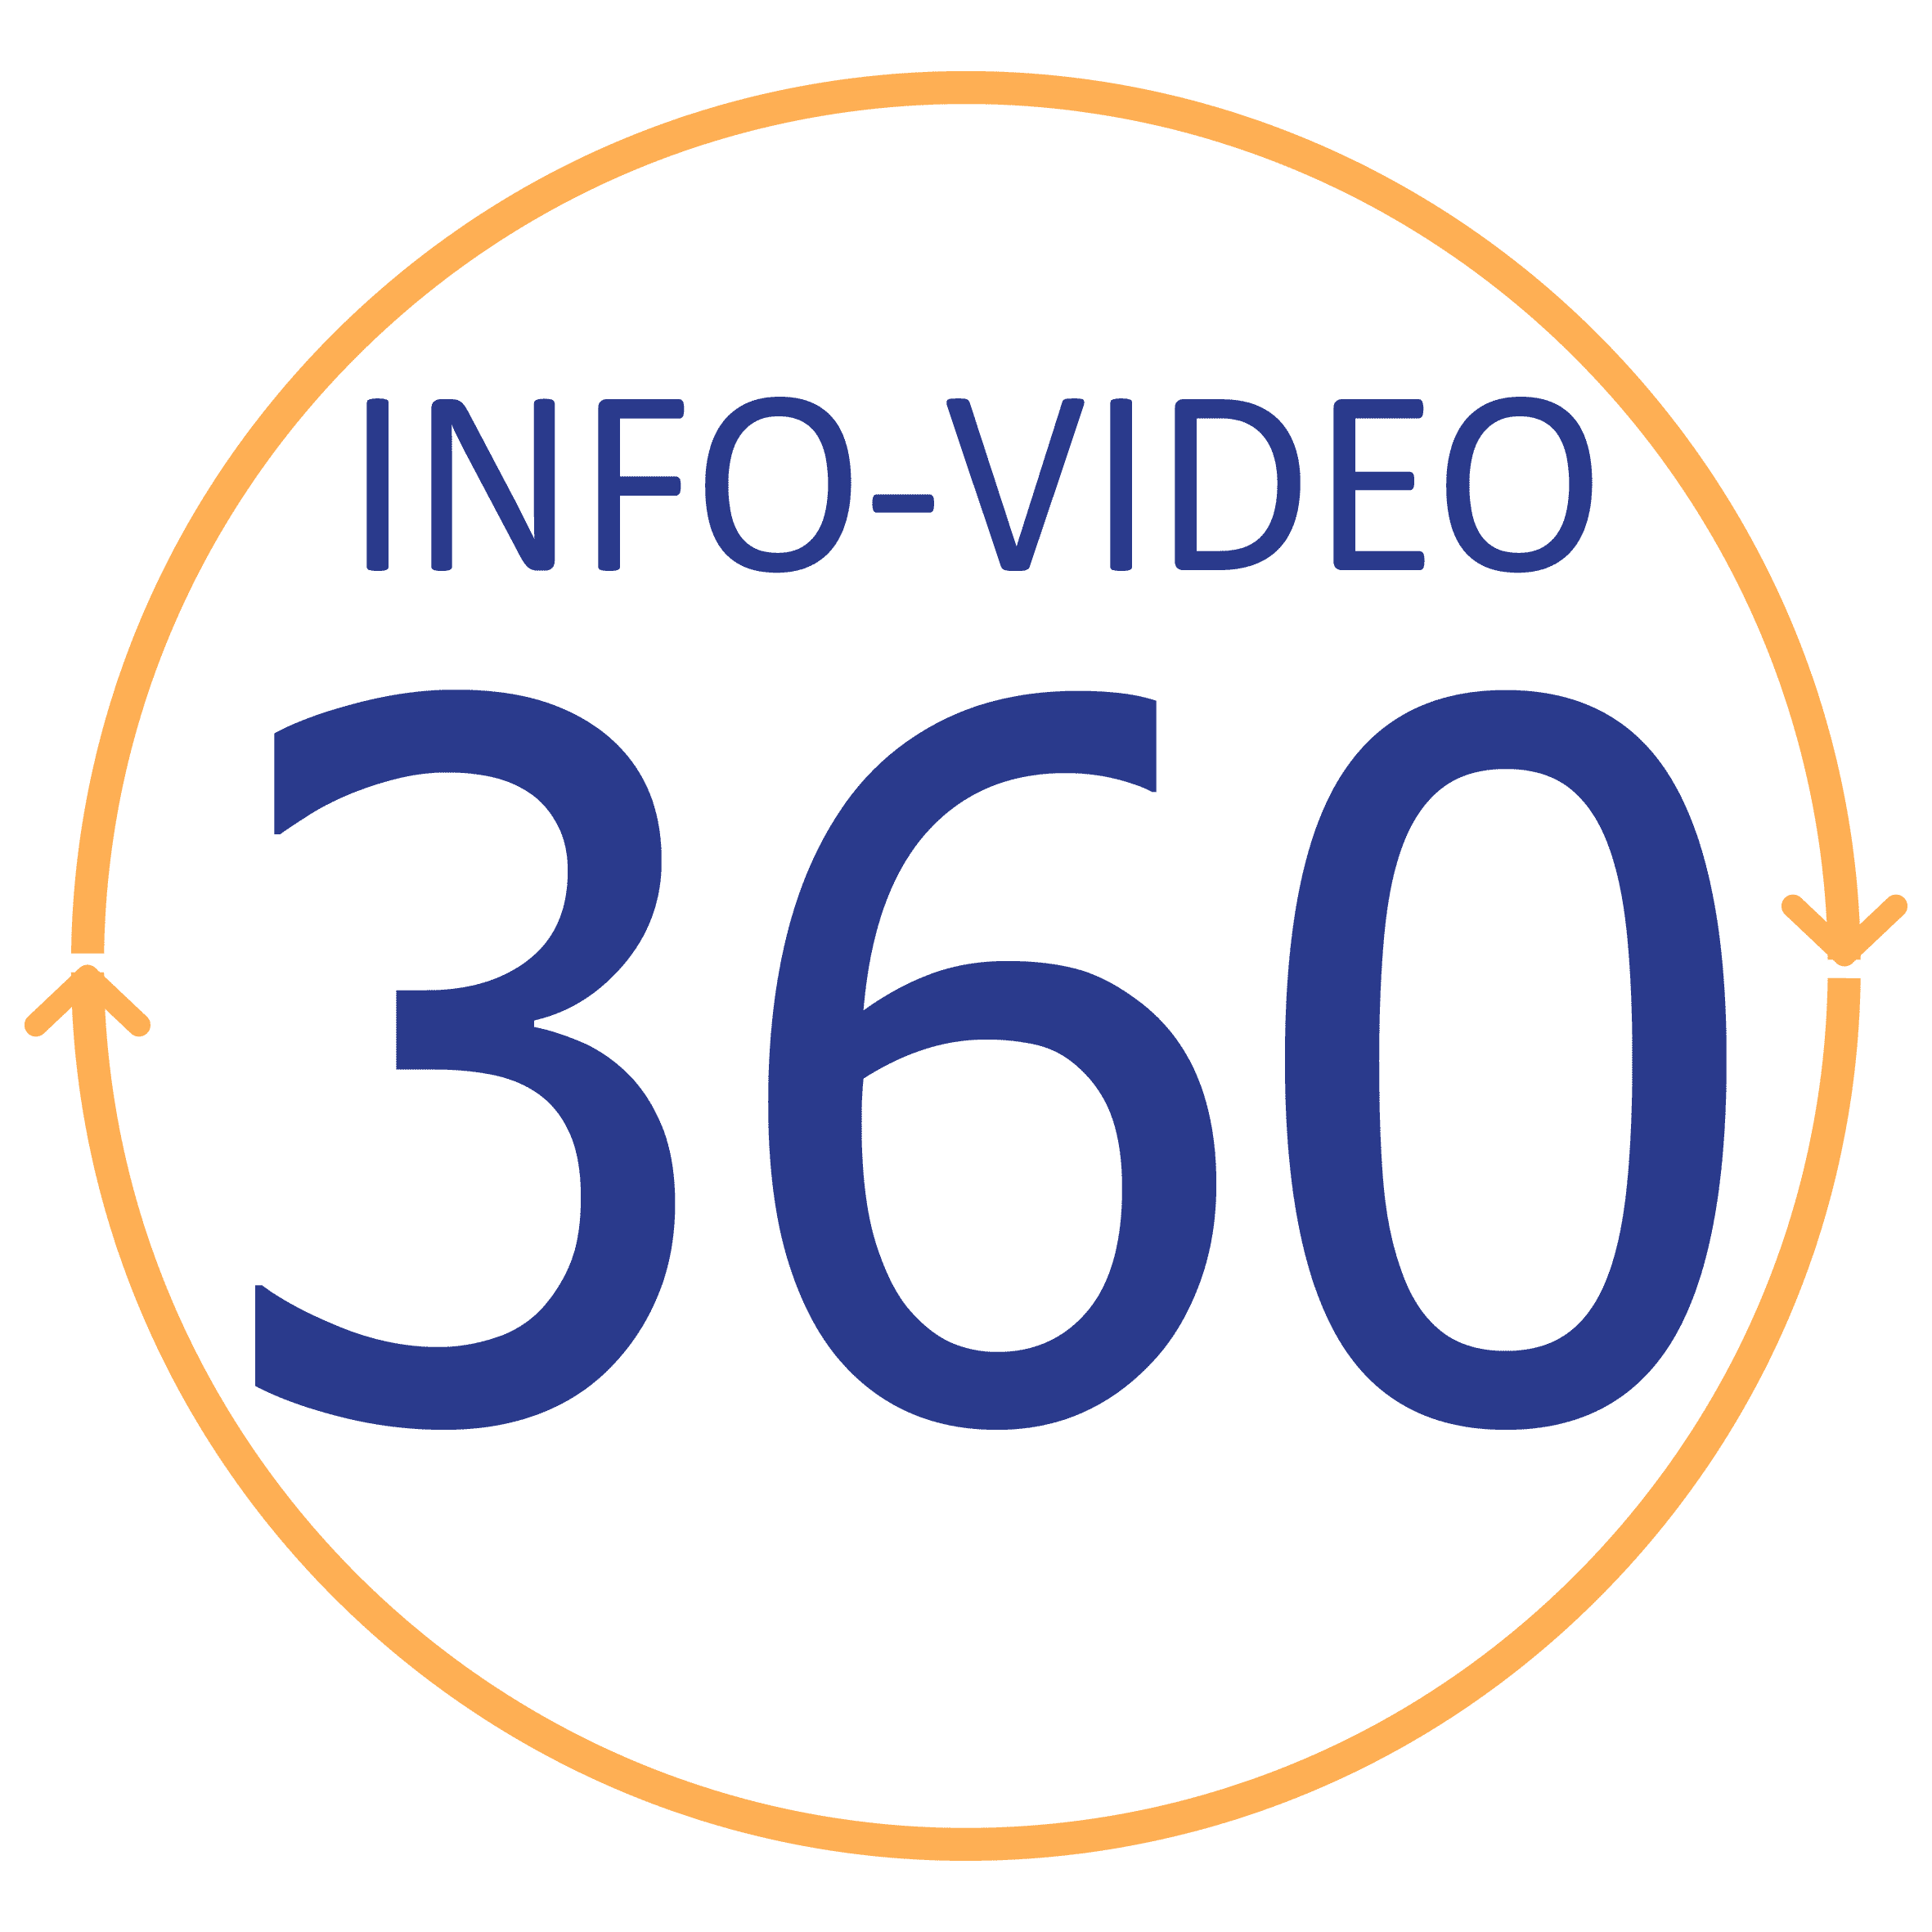 info-video360